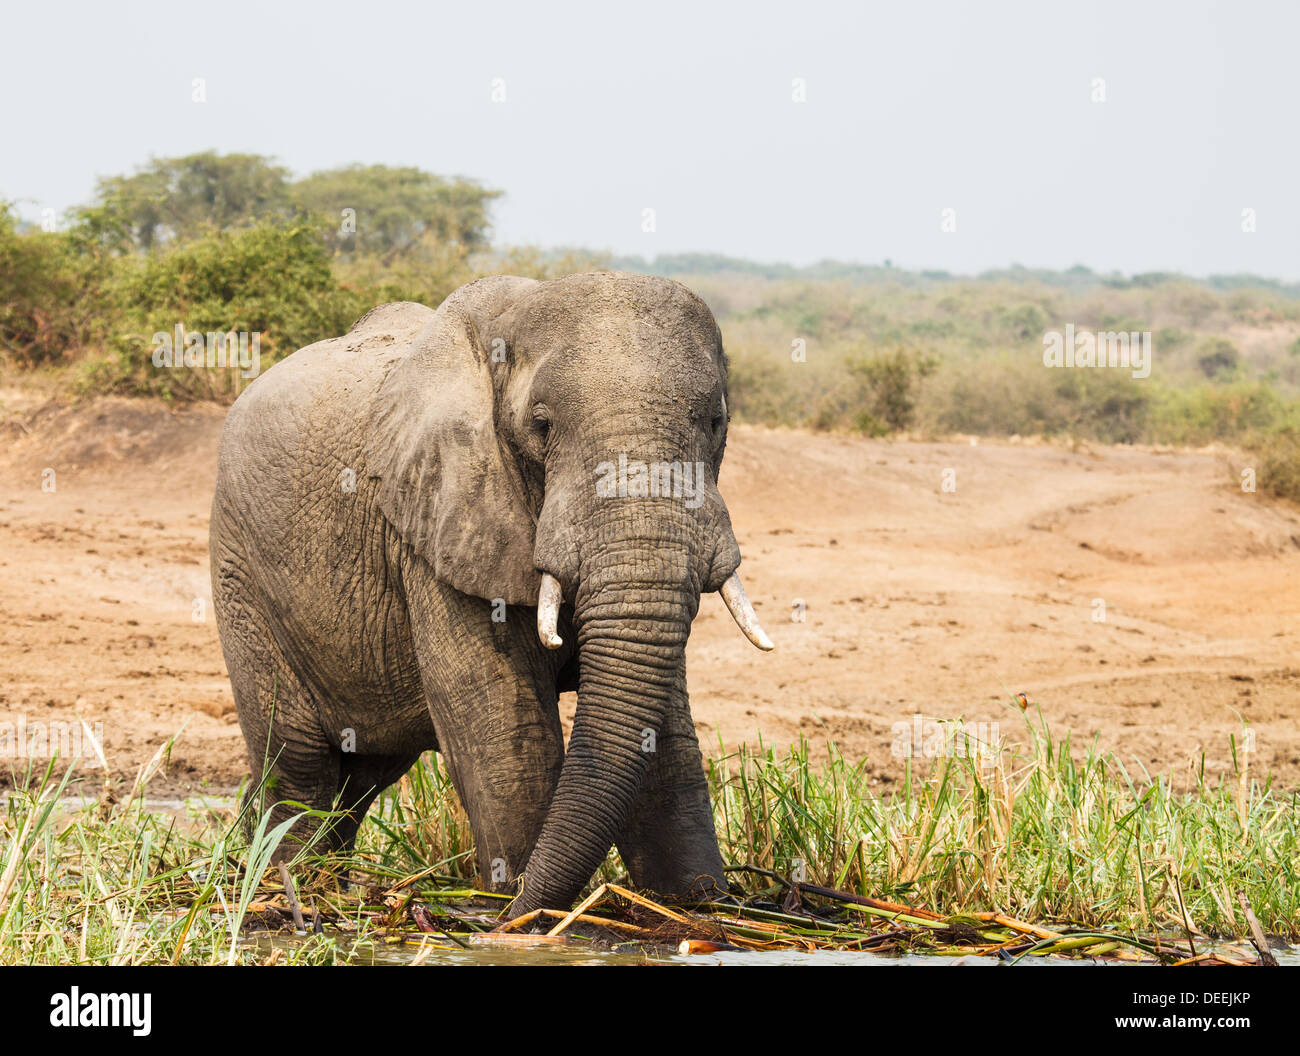 Beber agua en elefante salvaje Foto de stock